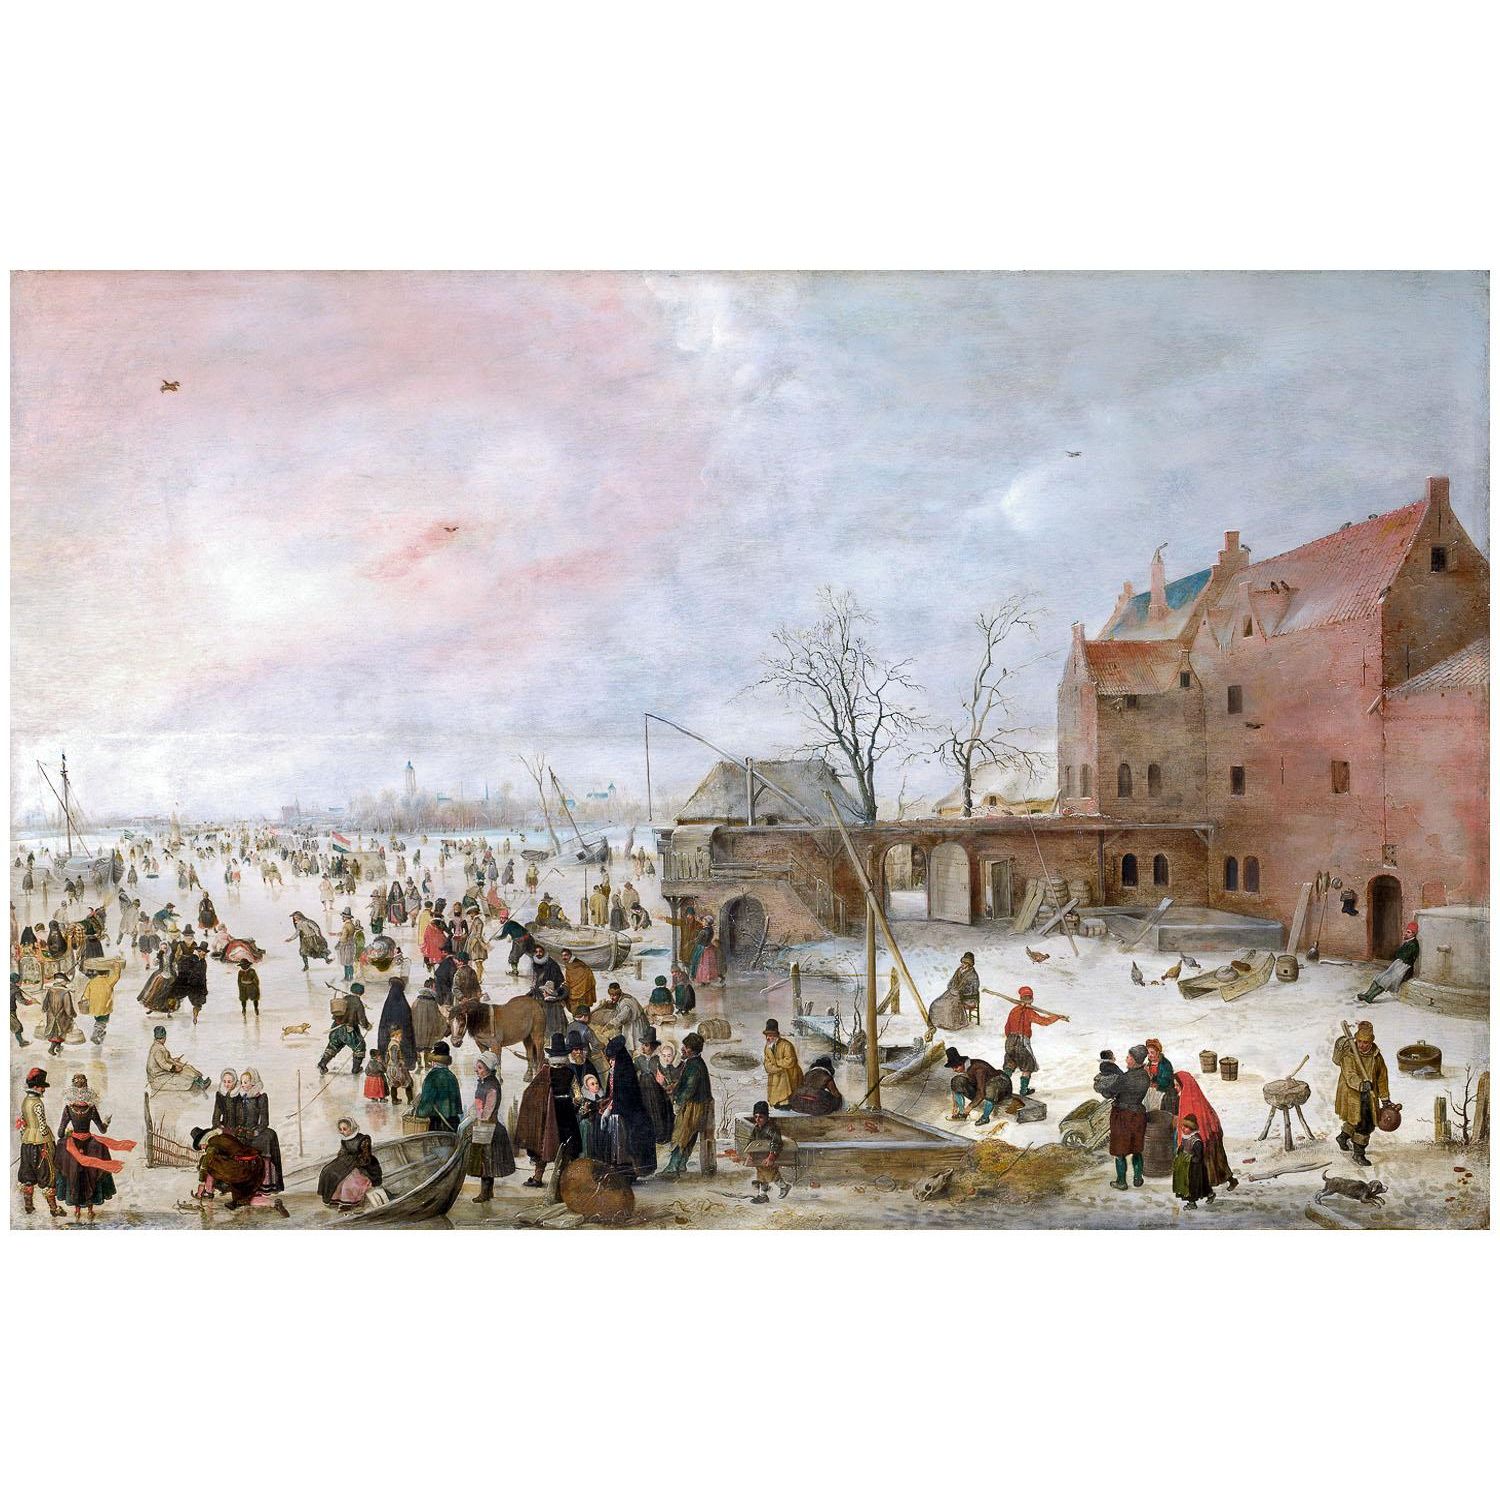 Hendrick Avercamp. A Scene on the Ice near a Town. 1615. National Gallery London